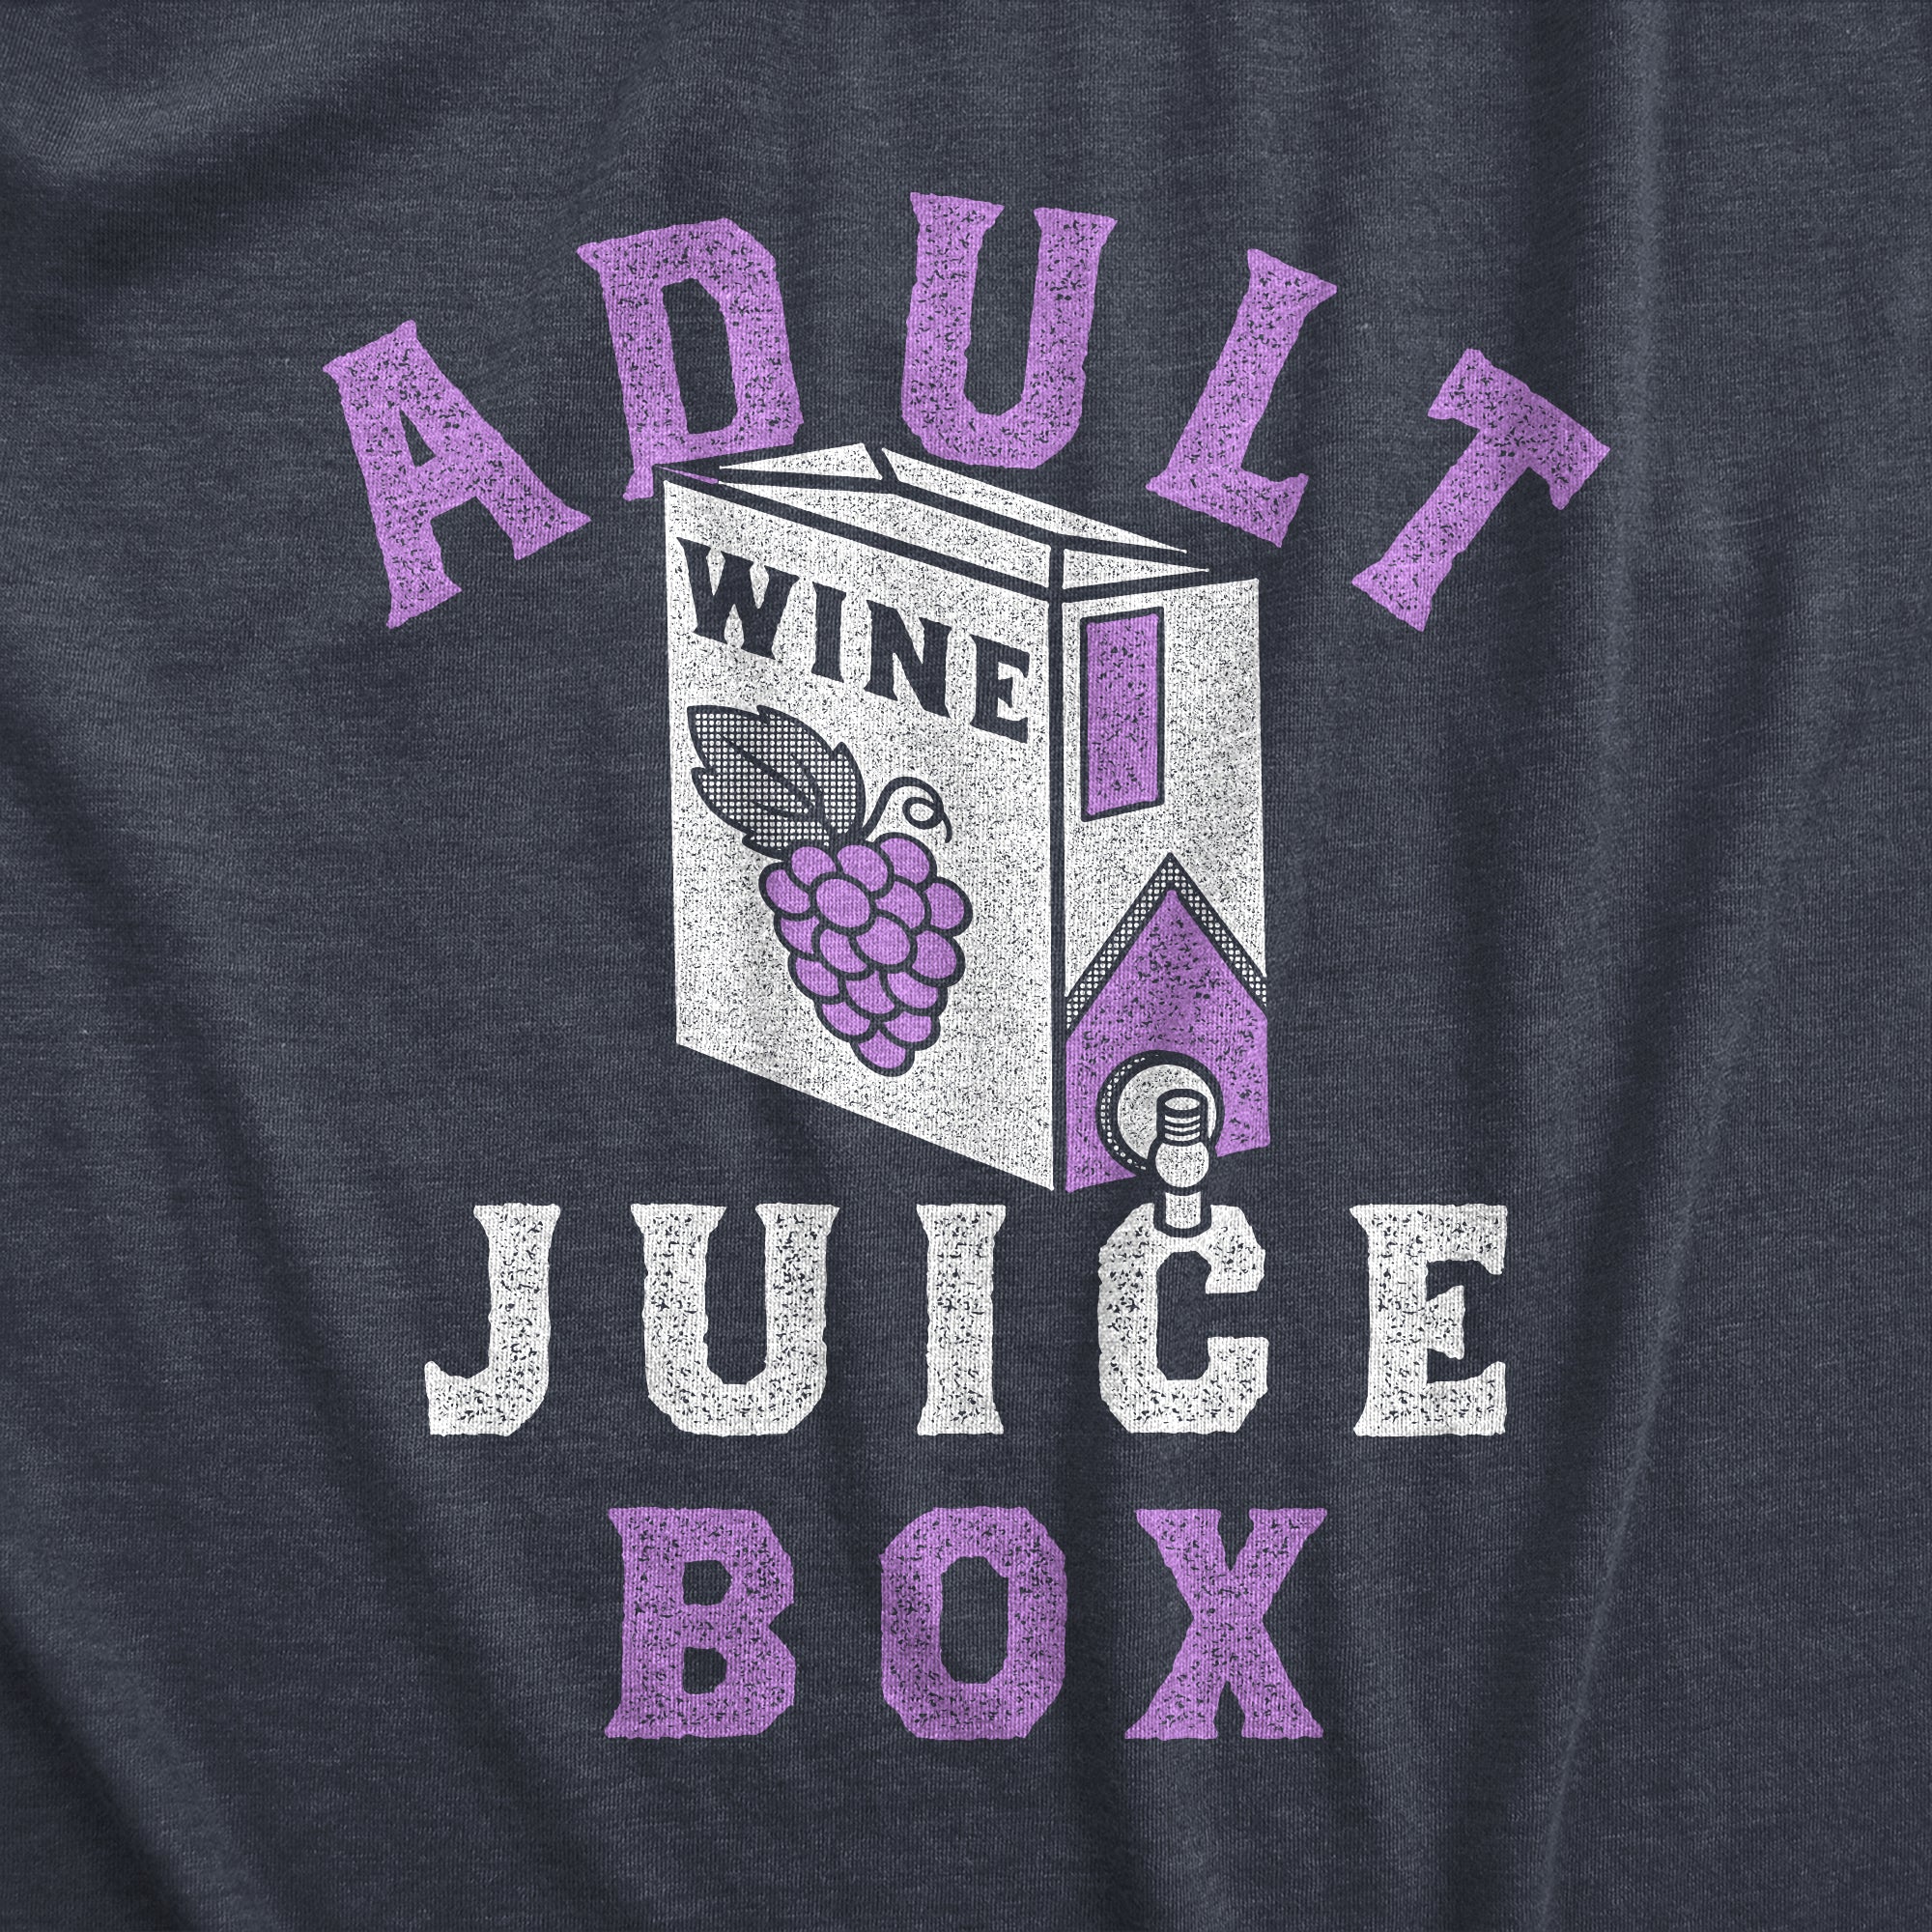 Funny Heather Black - Juice Box Adult Juice Box Womens T Shirt Nerdy Wine sarcastic Tee